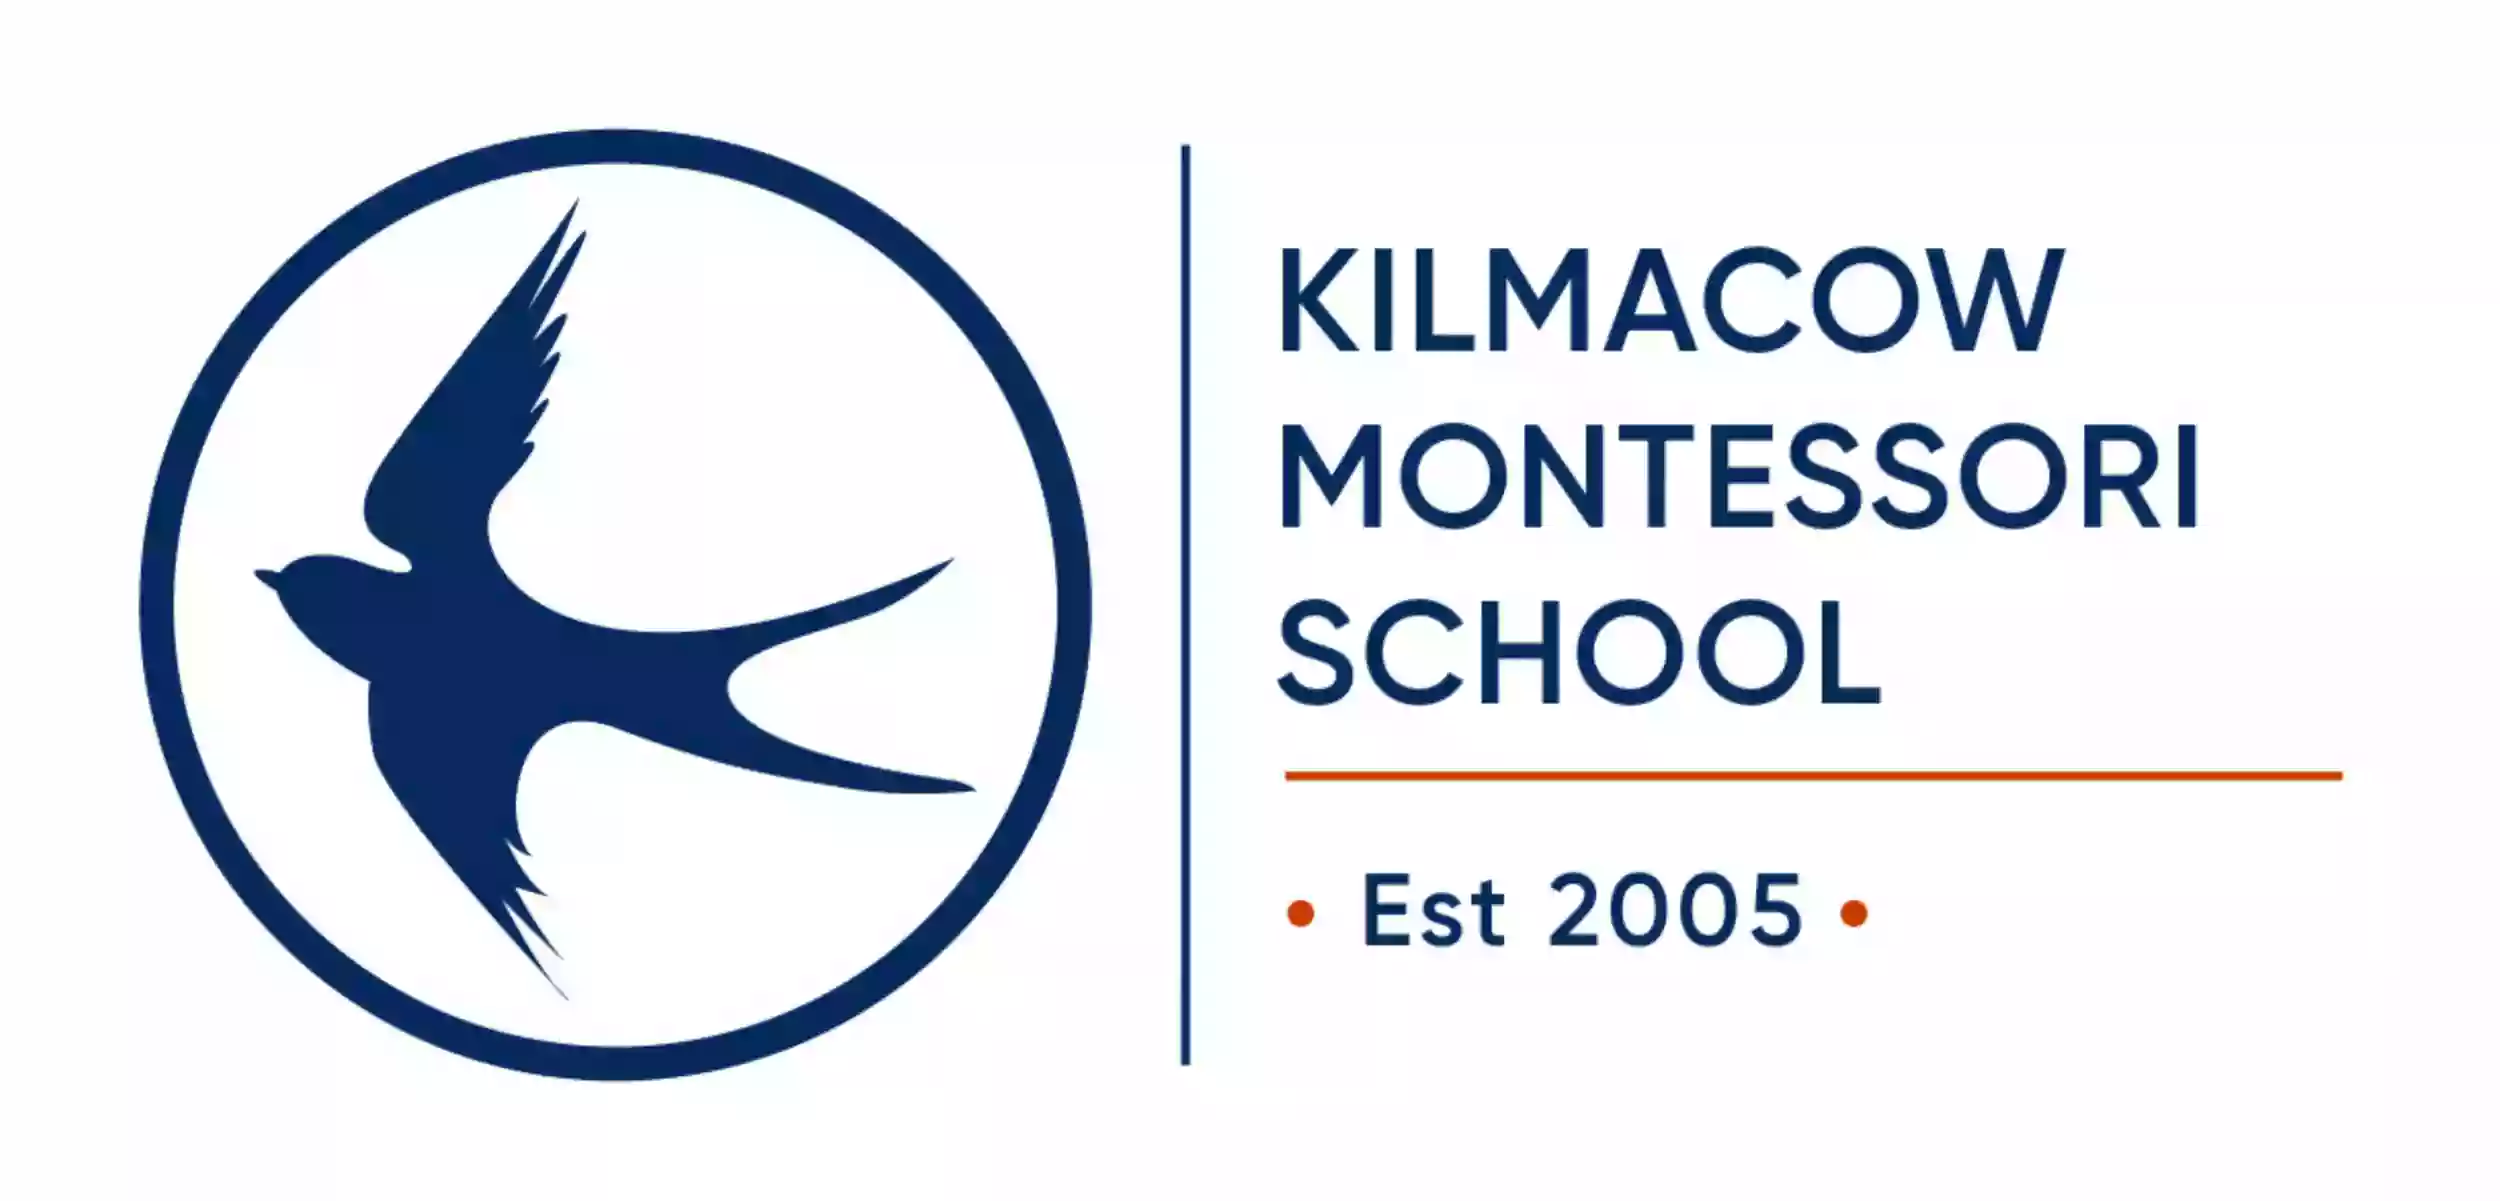 Kilmacow Montessori School